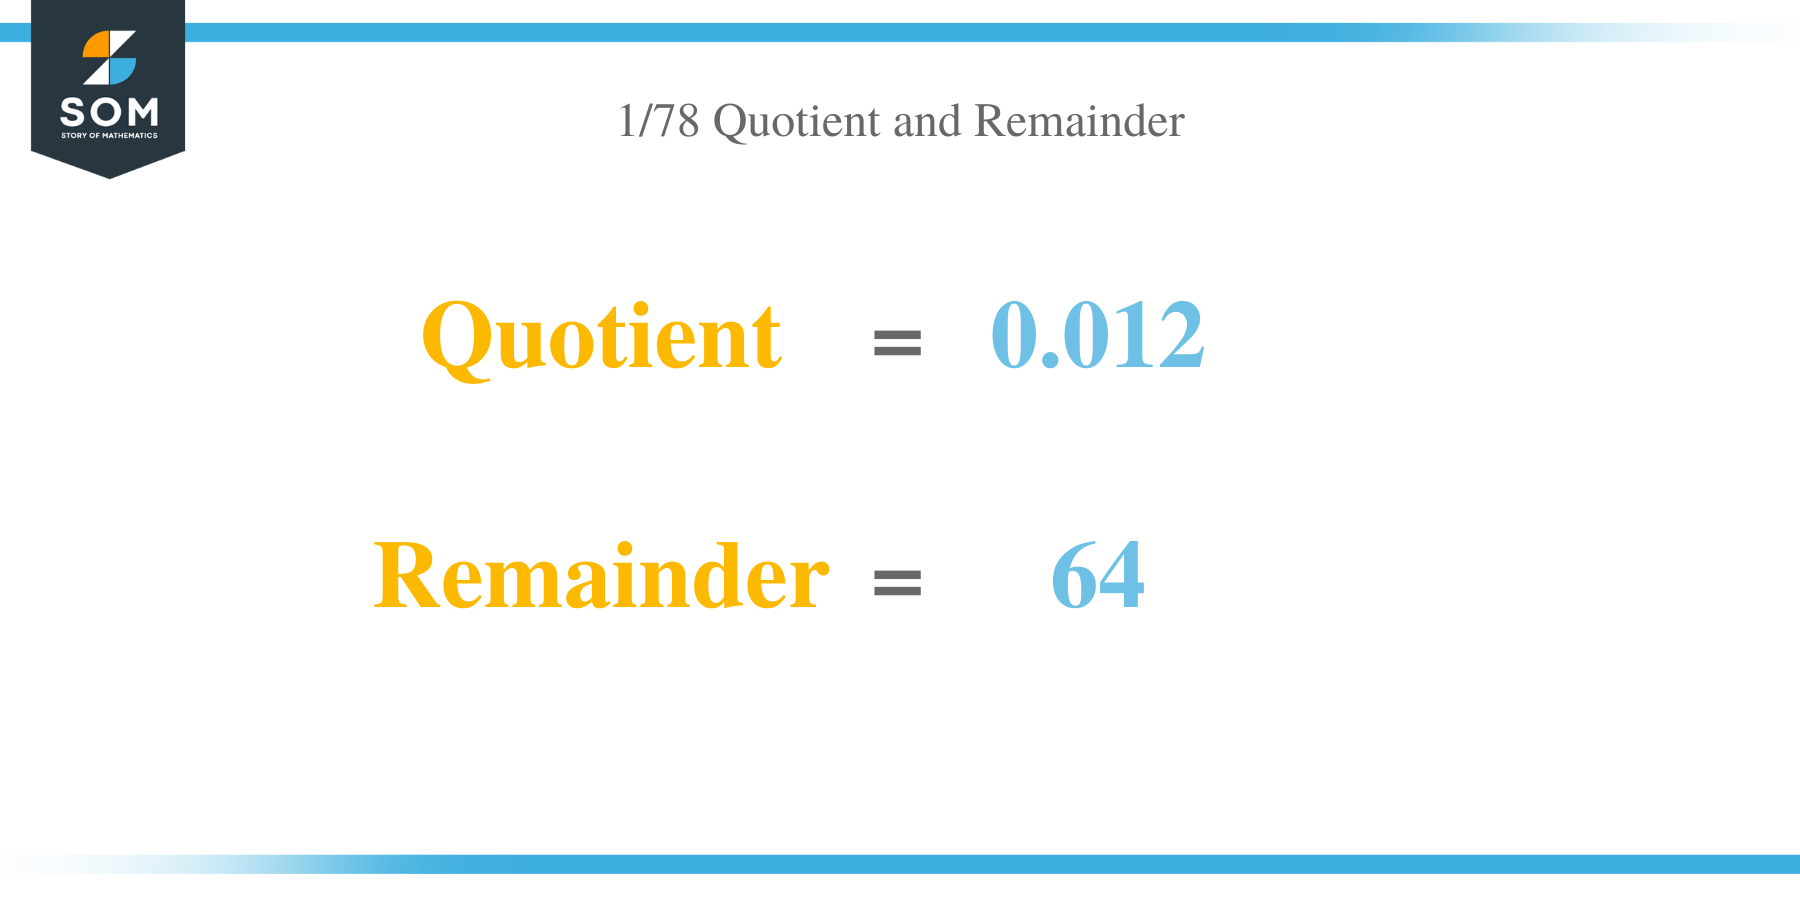 Quotient and Remainder of 1 per 78